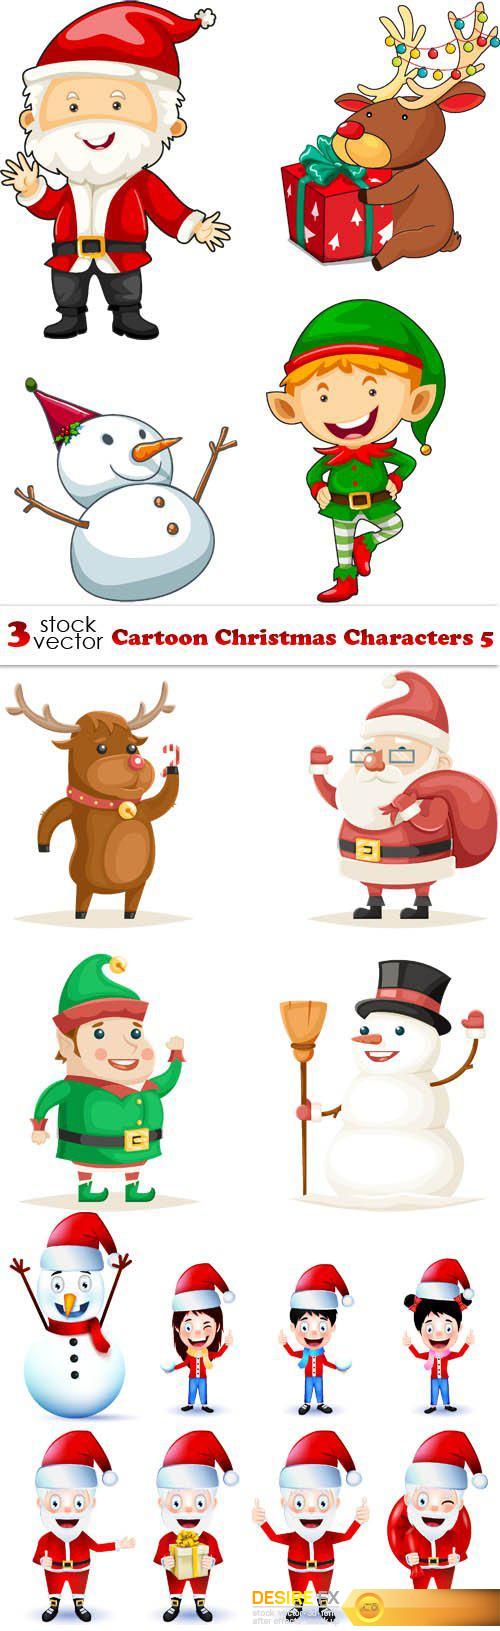 Vectors - Cartoon Christmas Characters 5